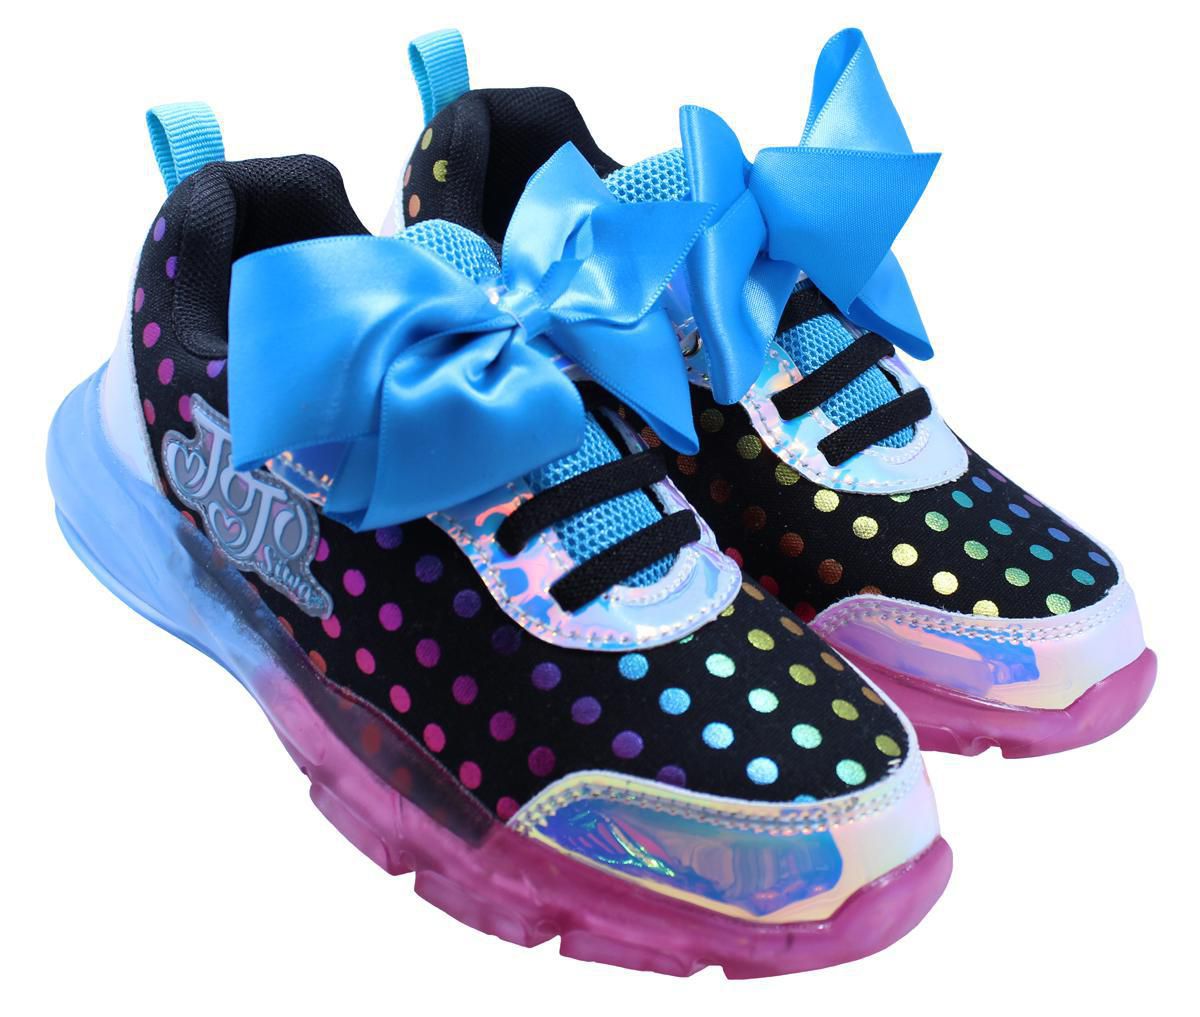 Jojo Siwa Youth Girls Size 4 Rainbow Glitter High Top Shoes | eBay